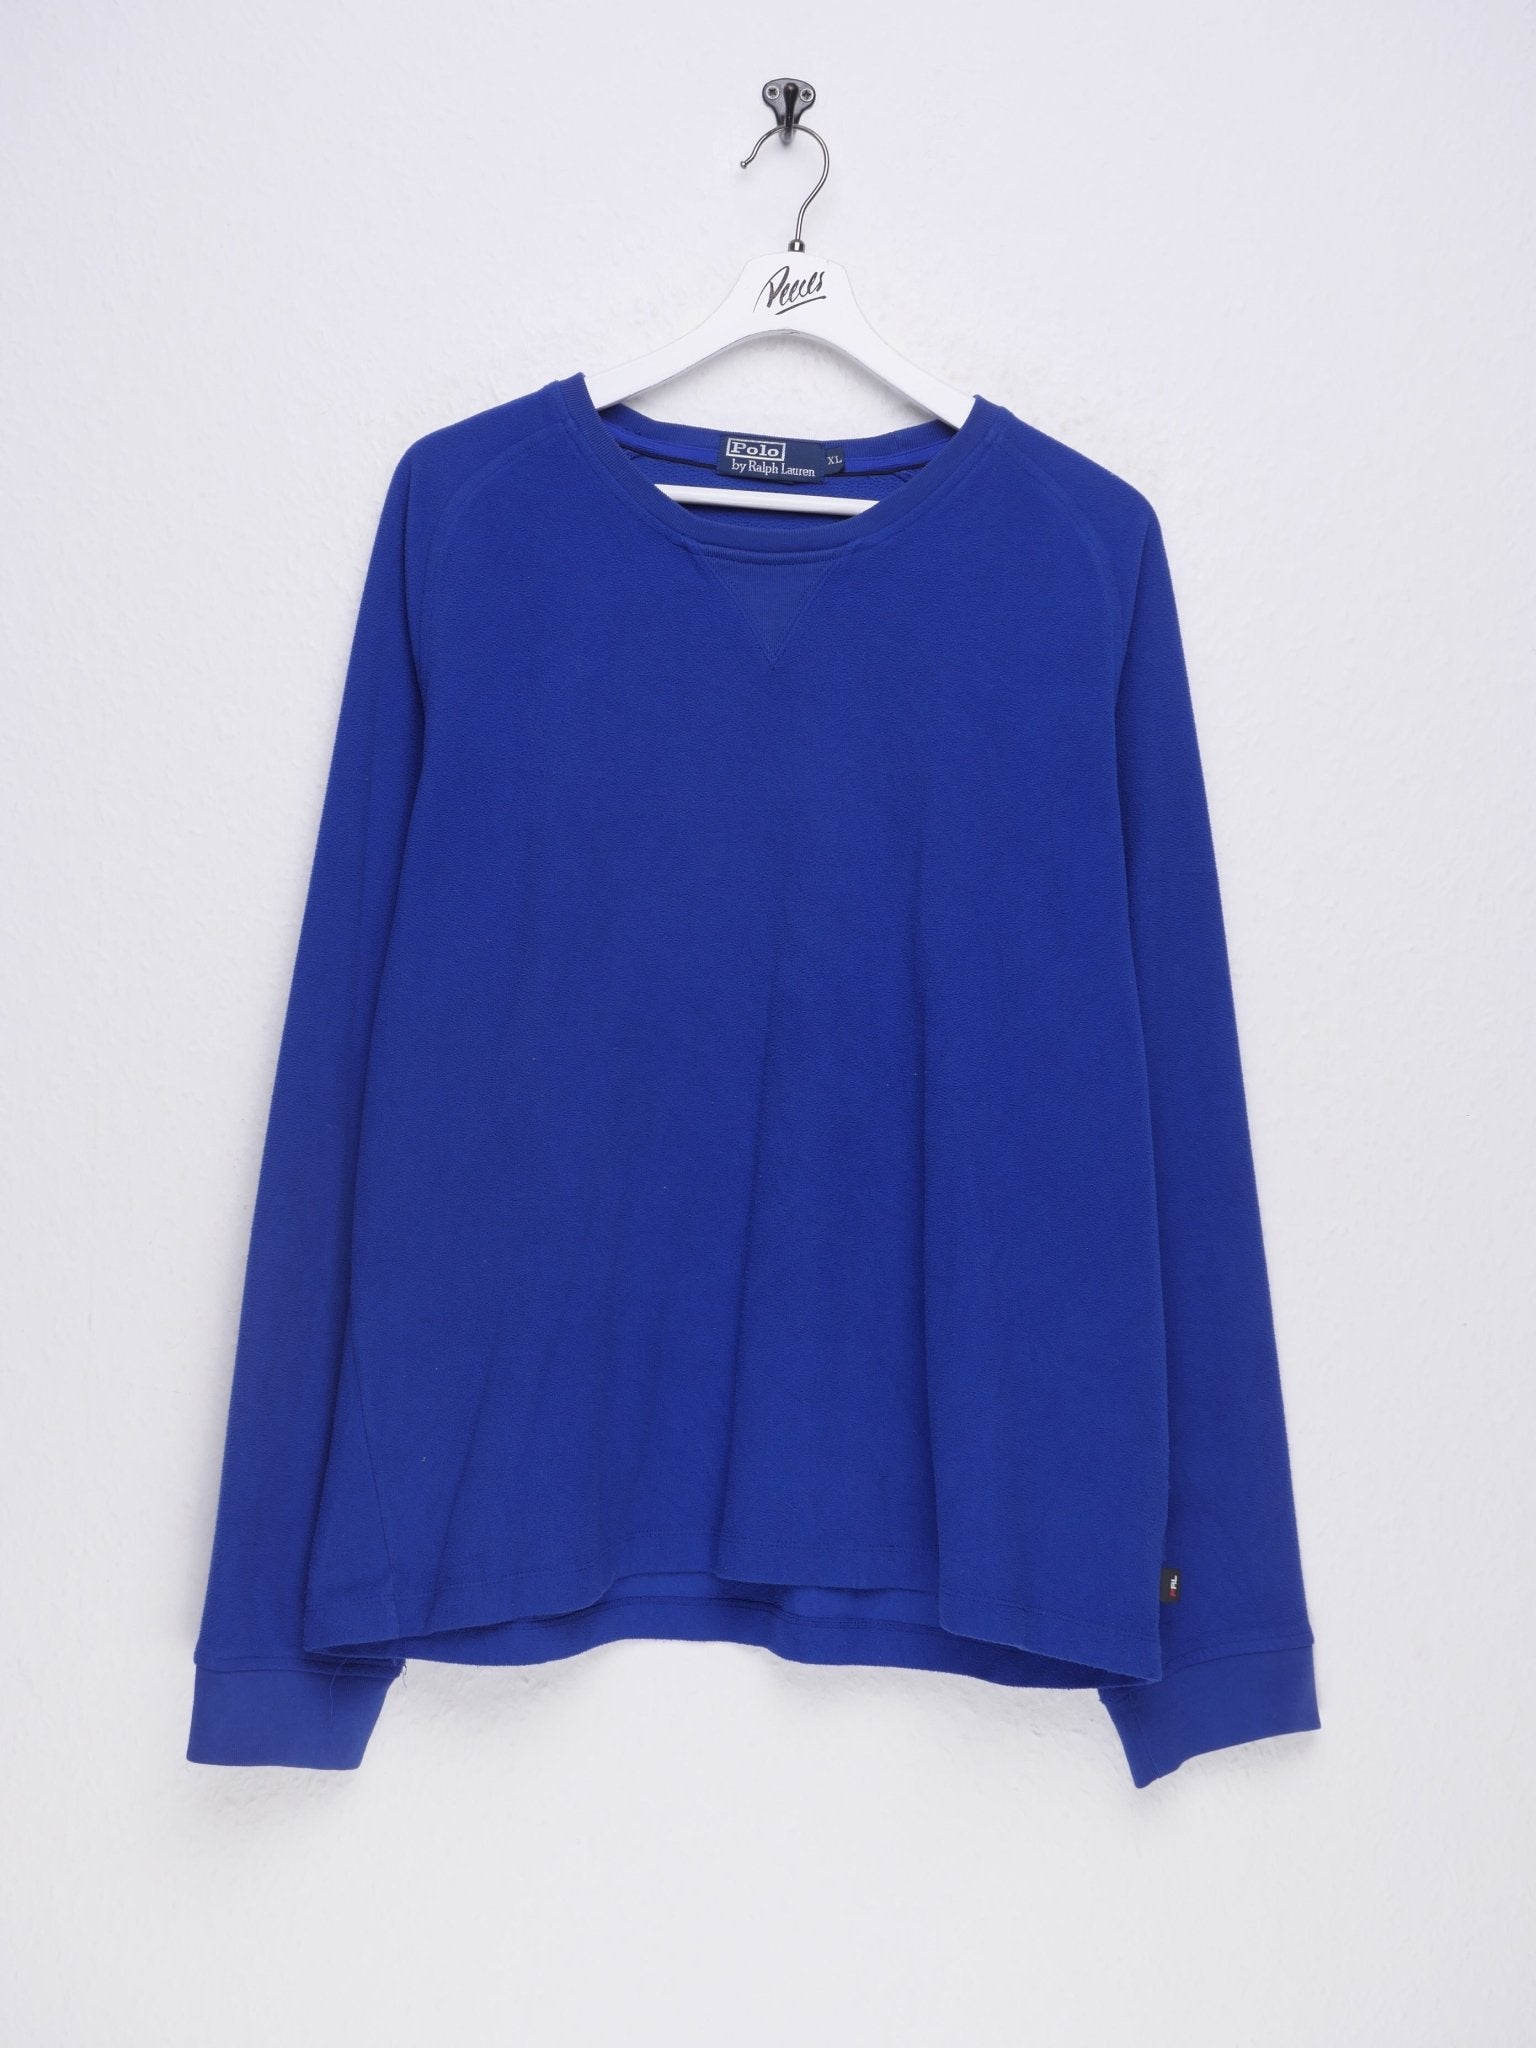 Polo Ralph Lauren plain blue Vintage fleece Sweater - Peeces